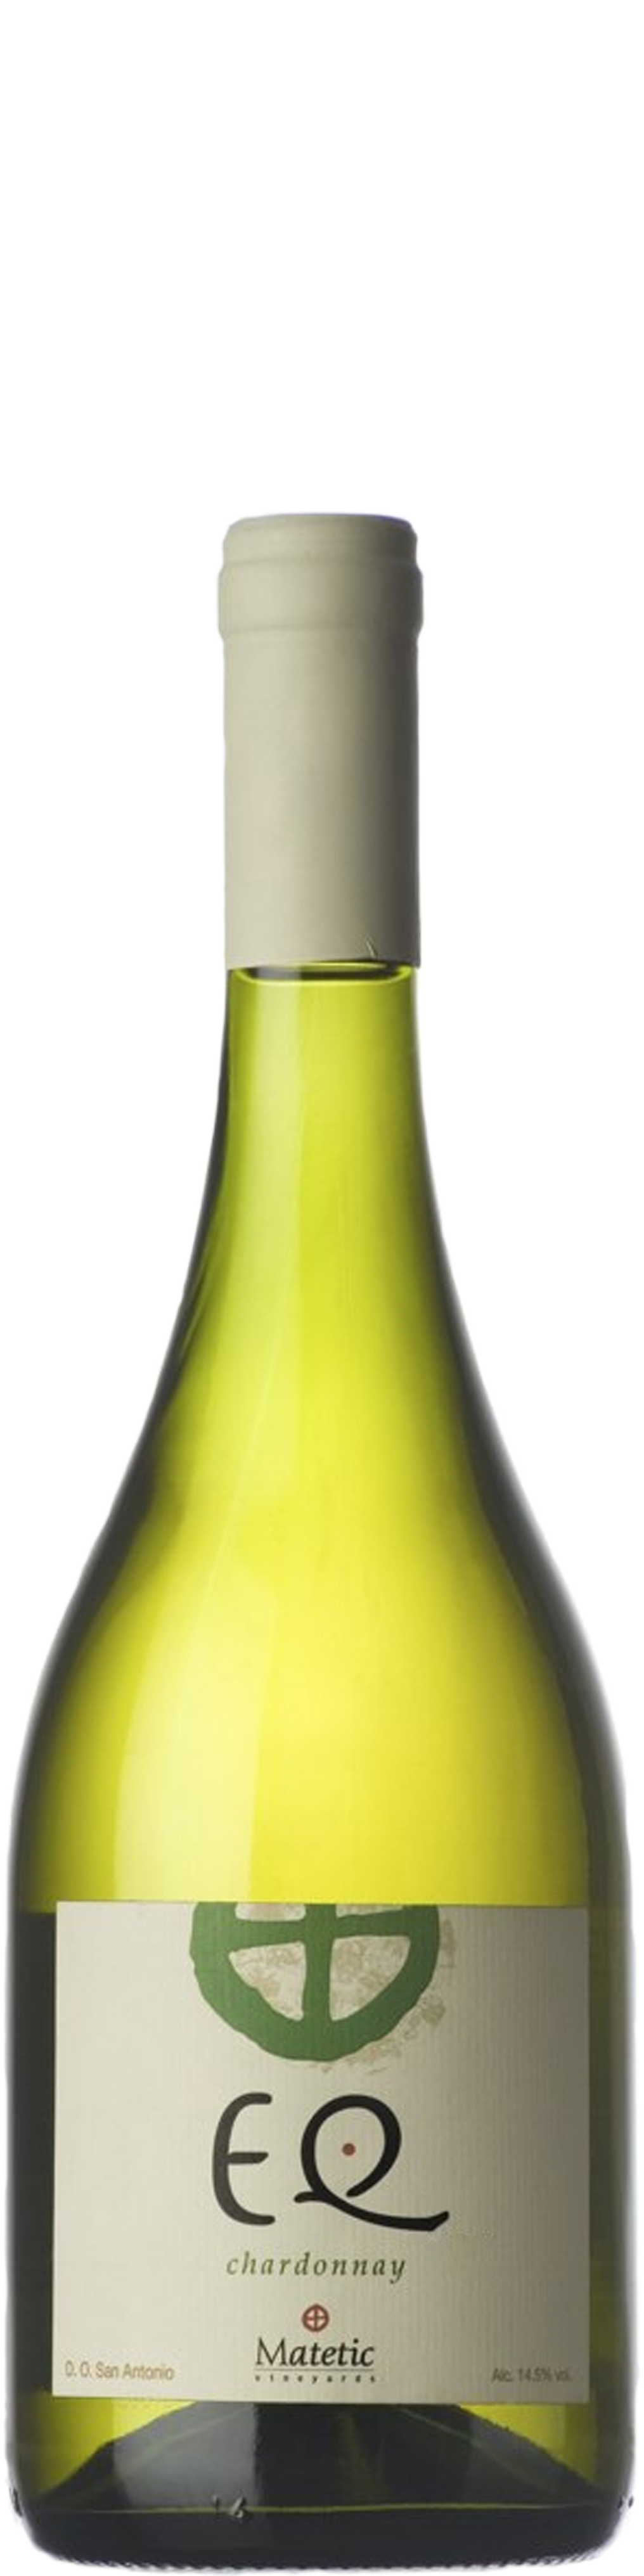 Bottle shot of 2011 EQ Chardonnay Organic